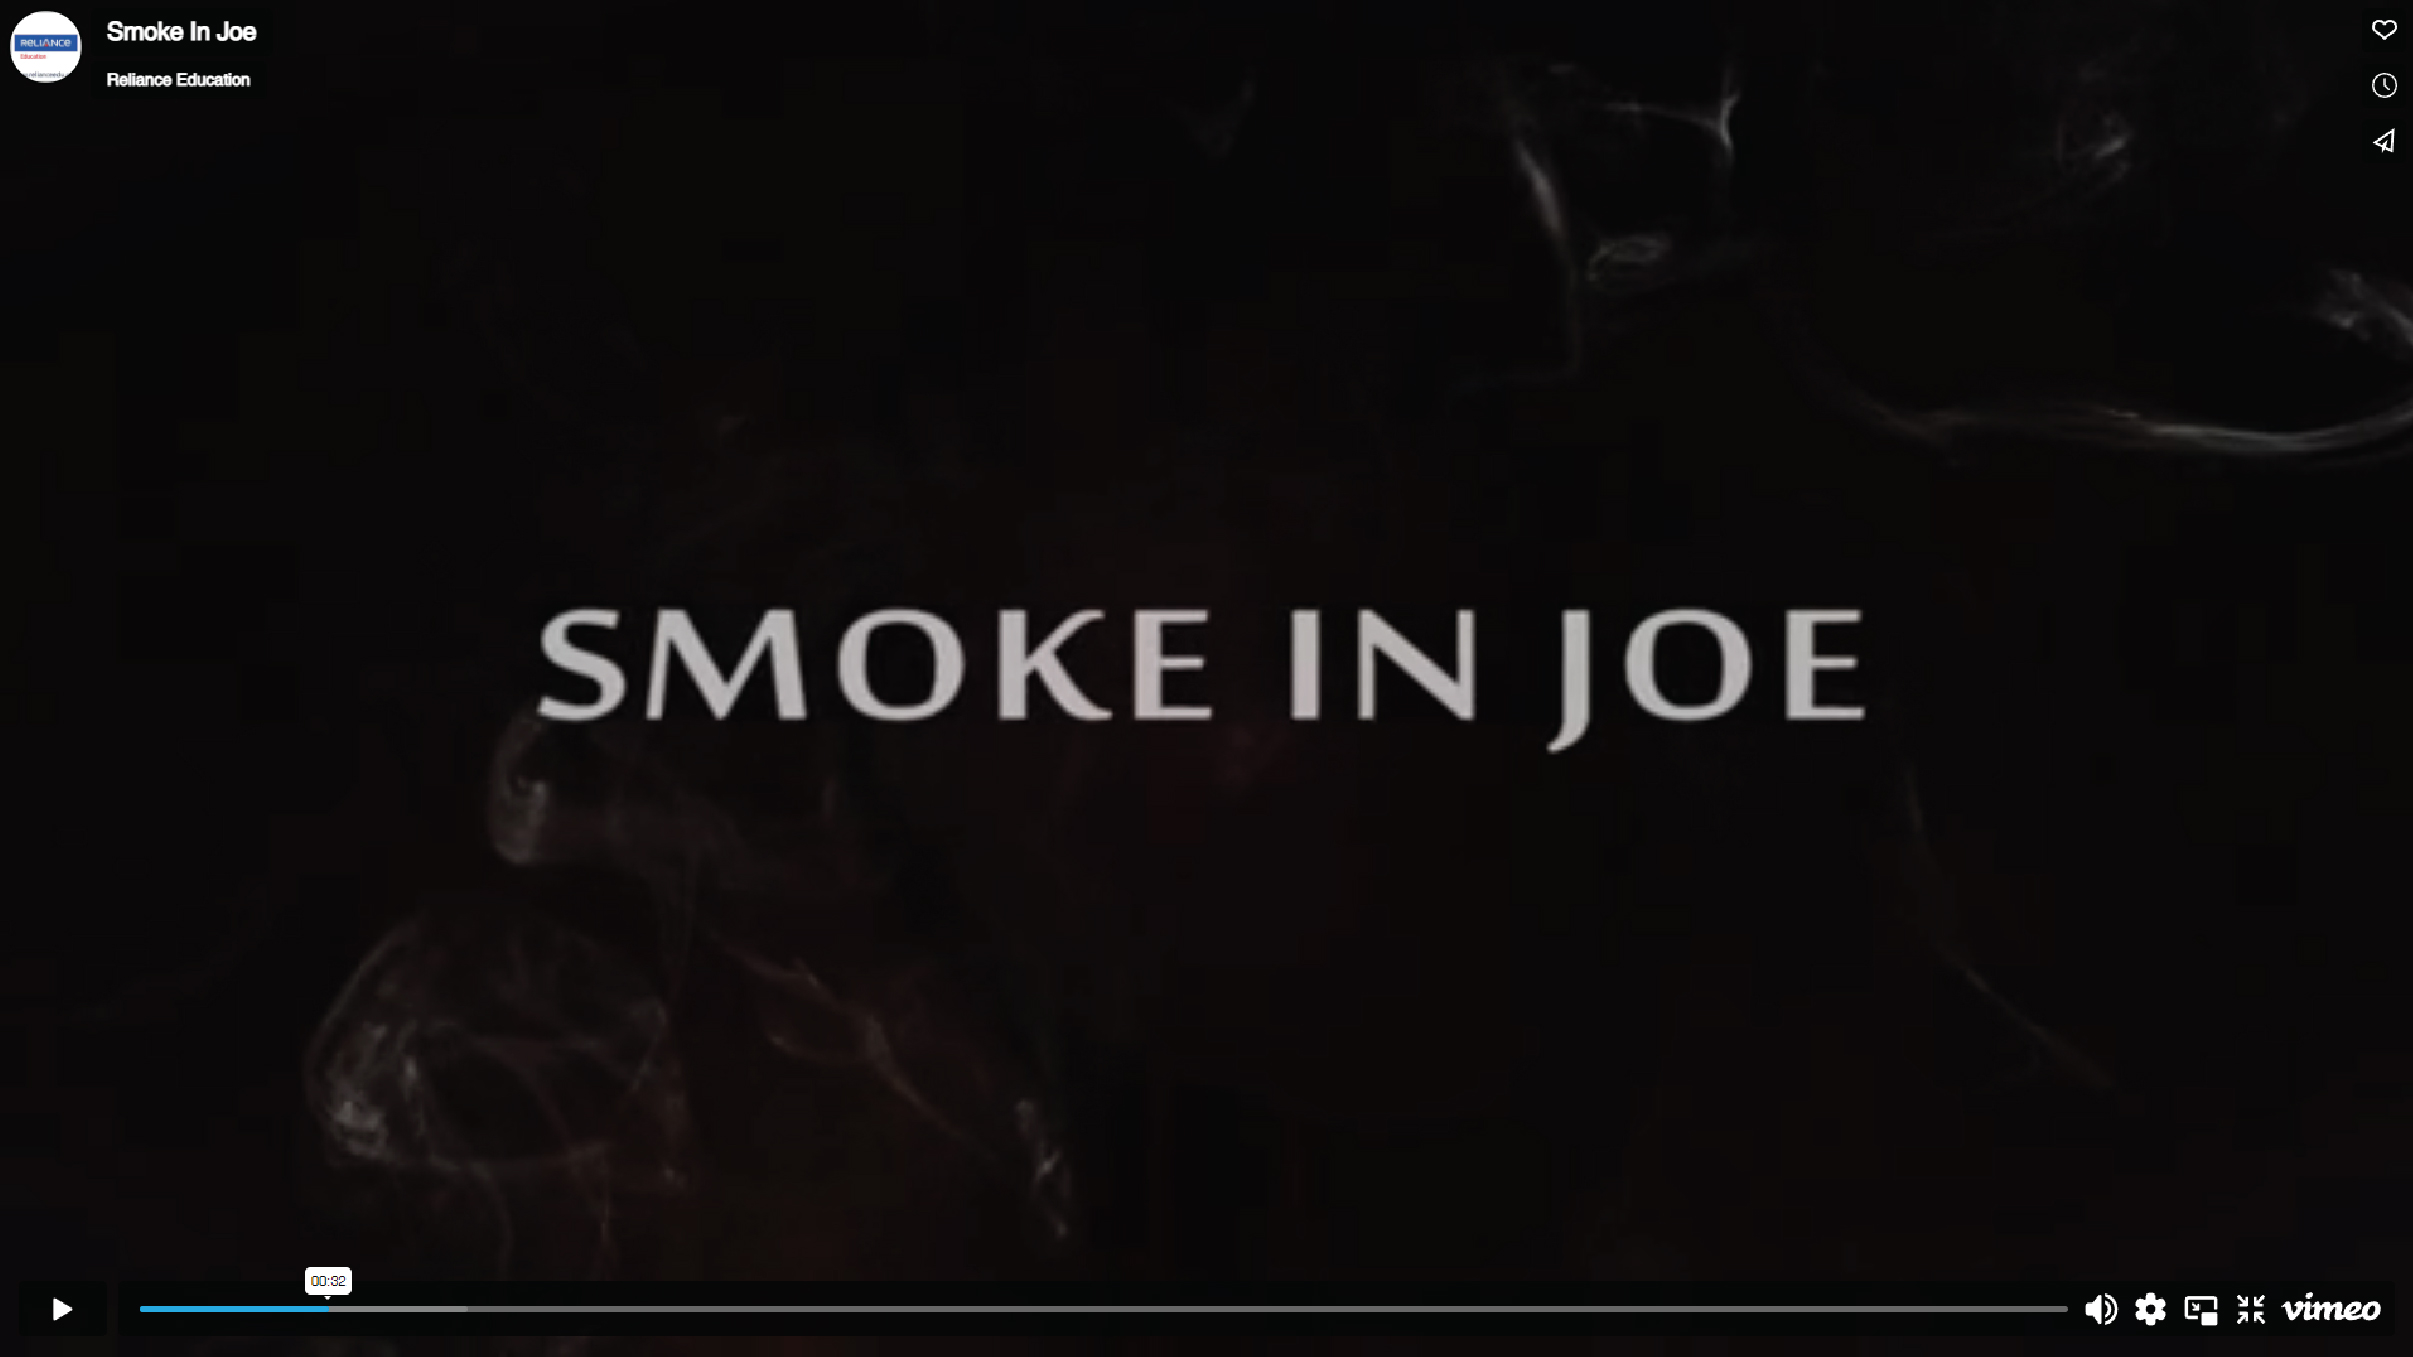 Smoke in joe